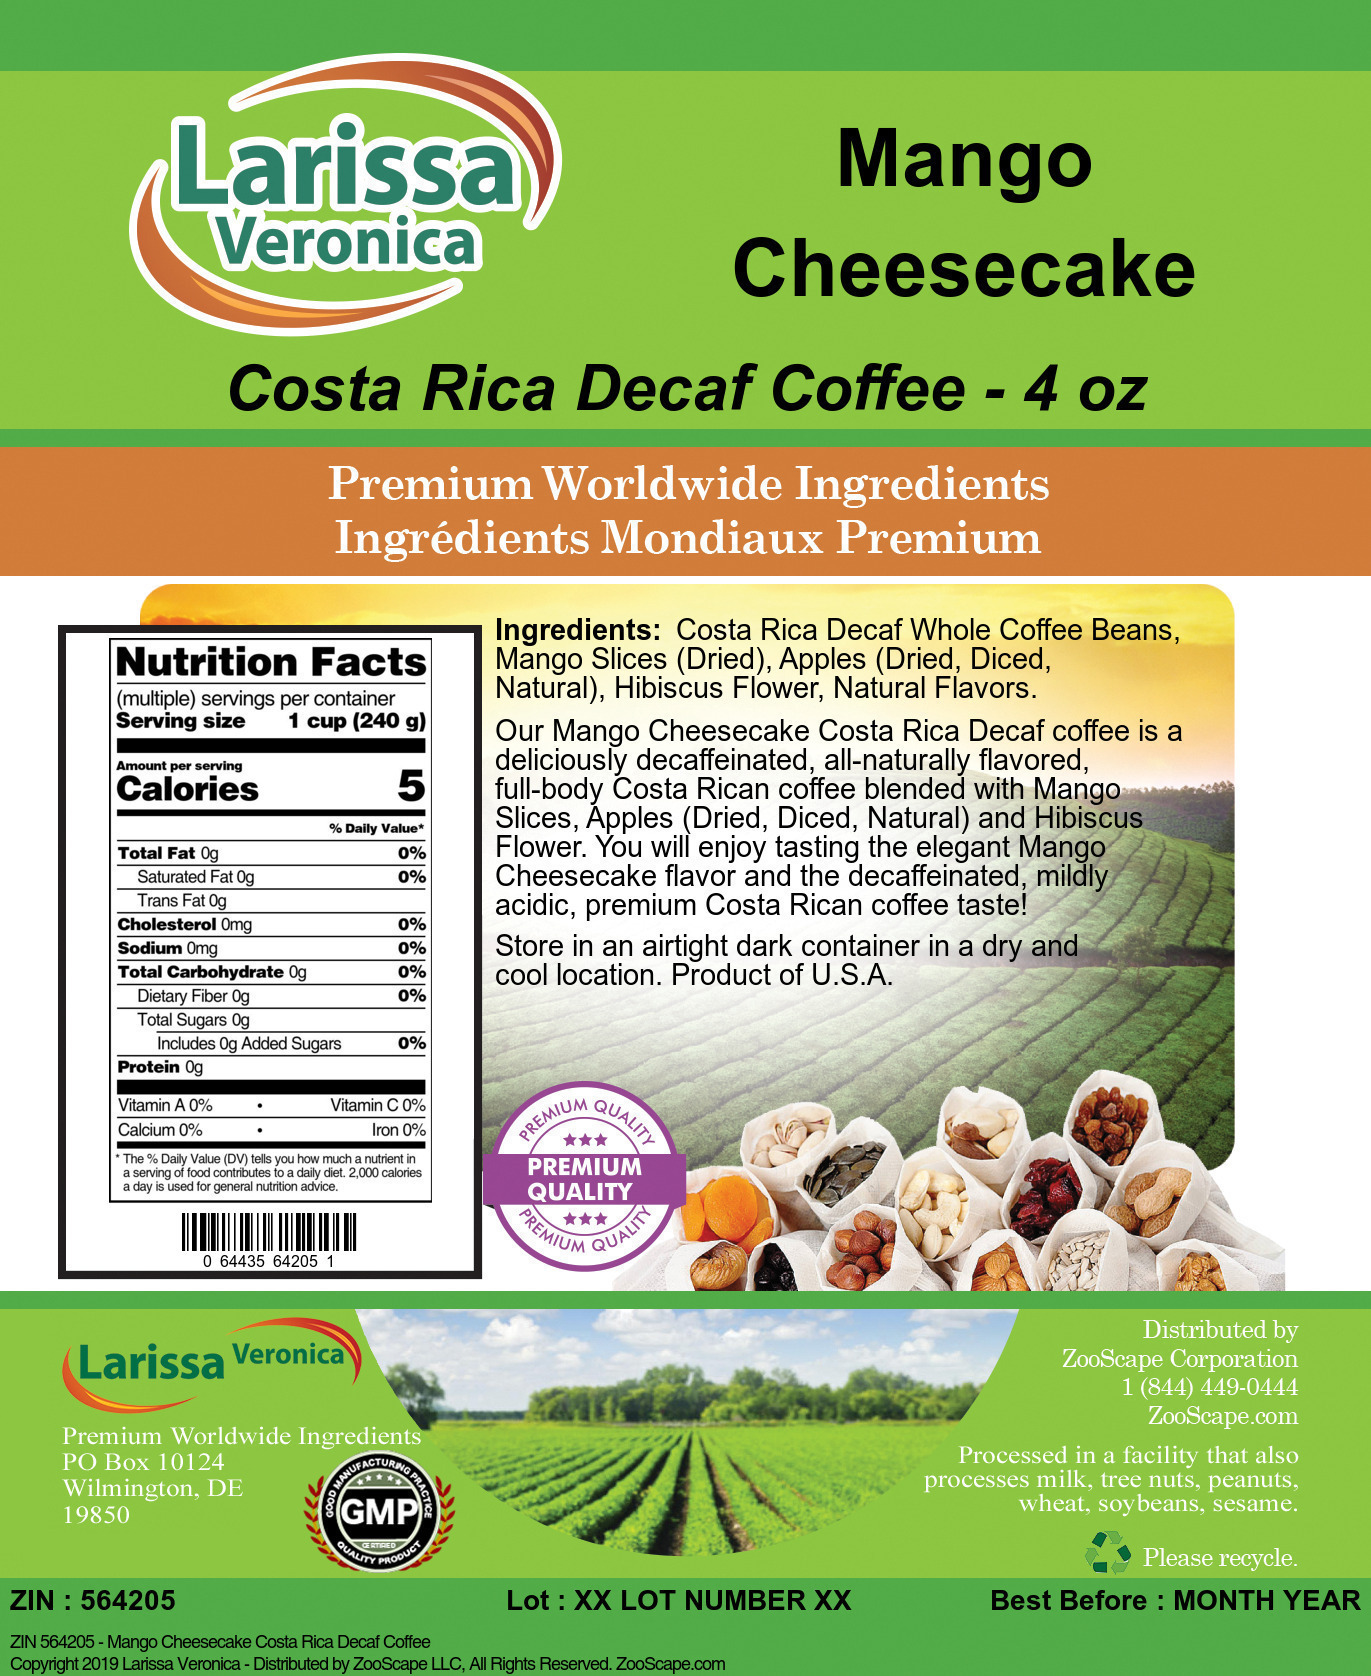 Mango Cheesecake Costa Rica Decaf Coffee - Label